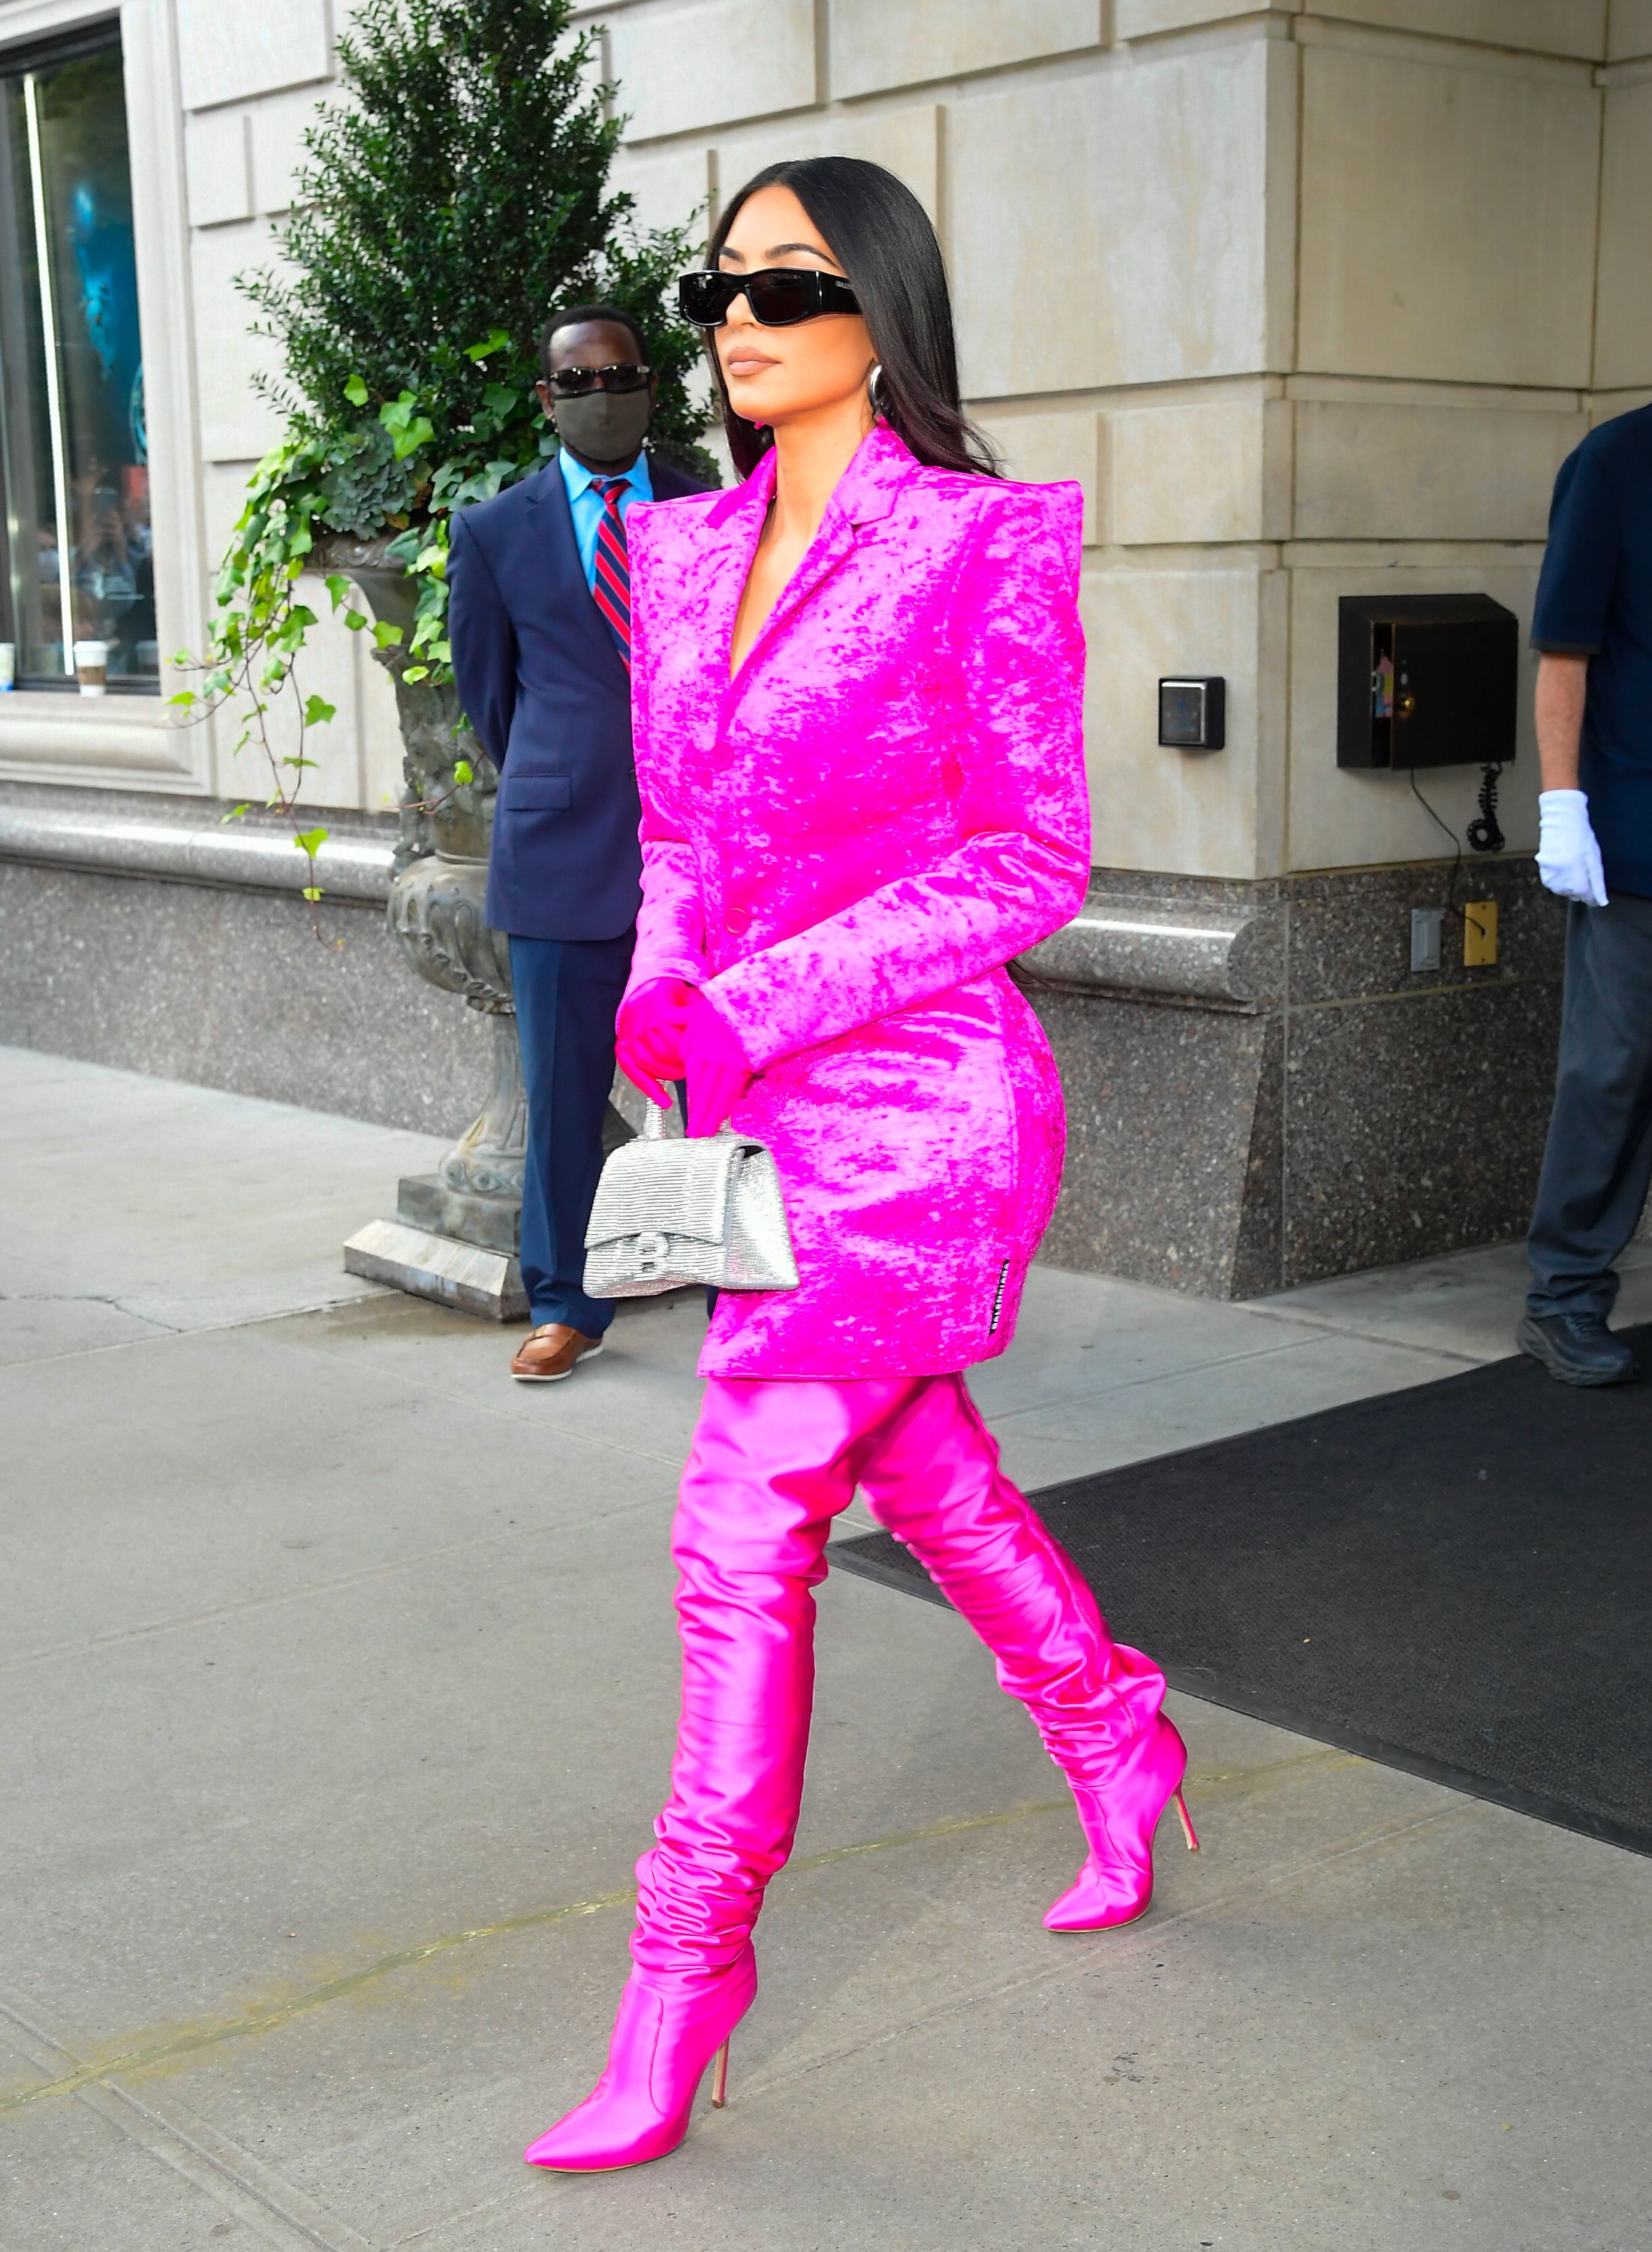 Look of the Week: Kim Kardashian steps into Balenciaga